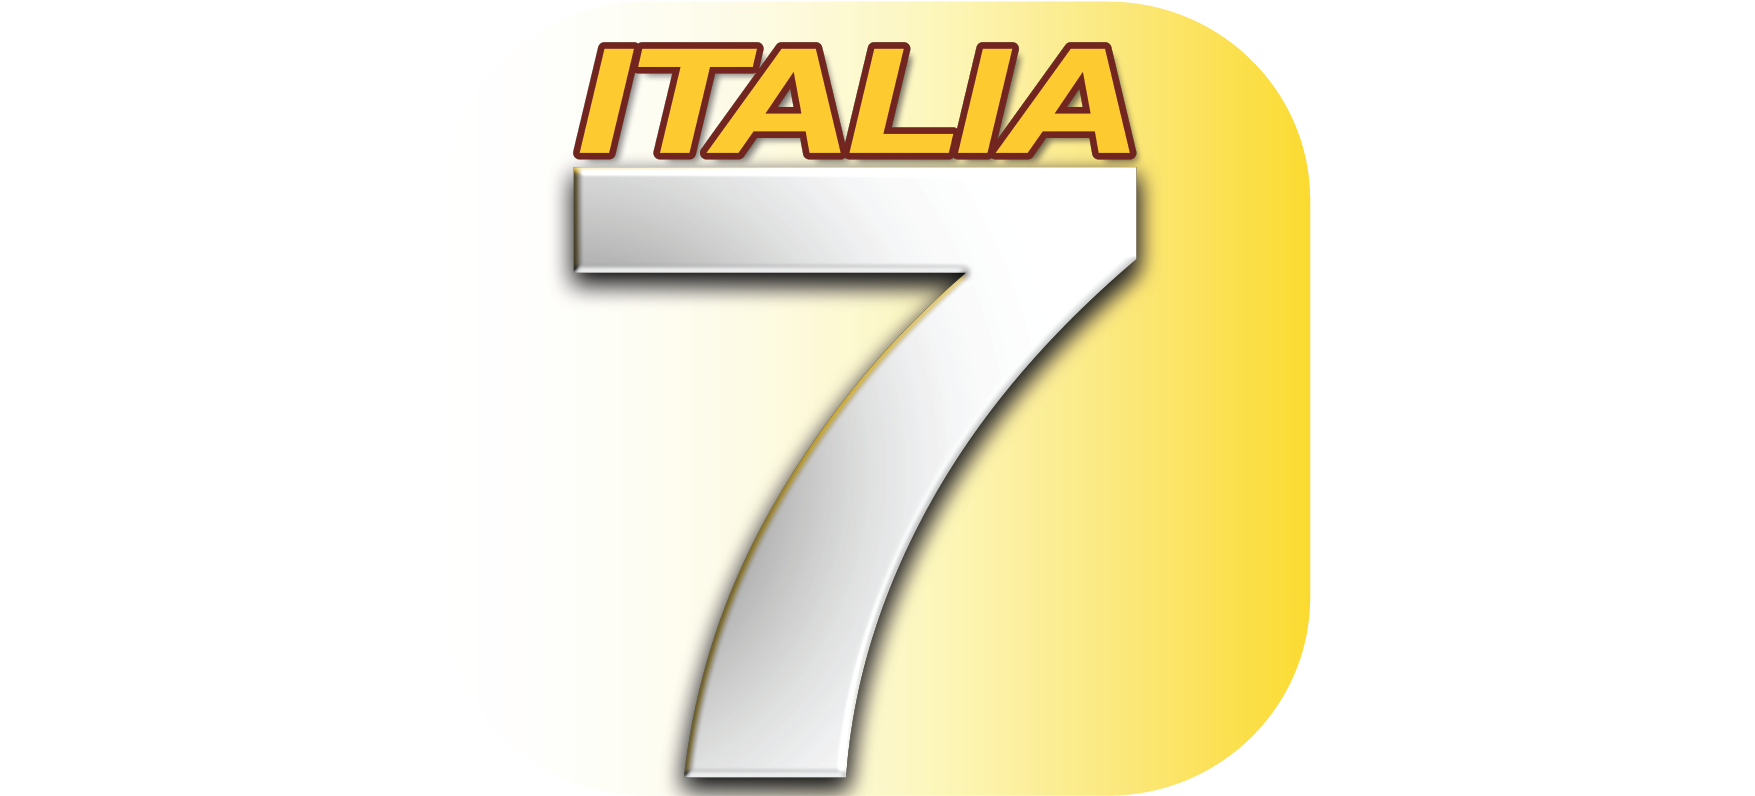 ITALIA 7 logo